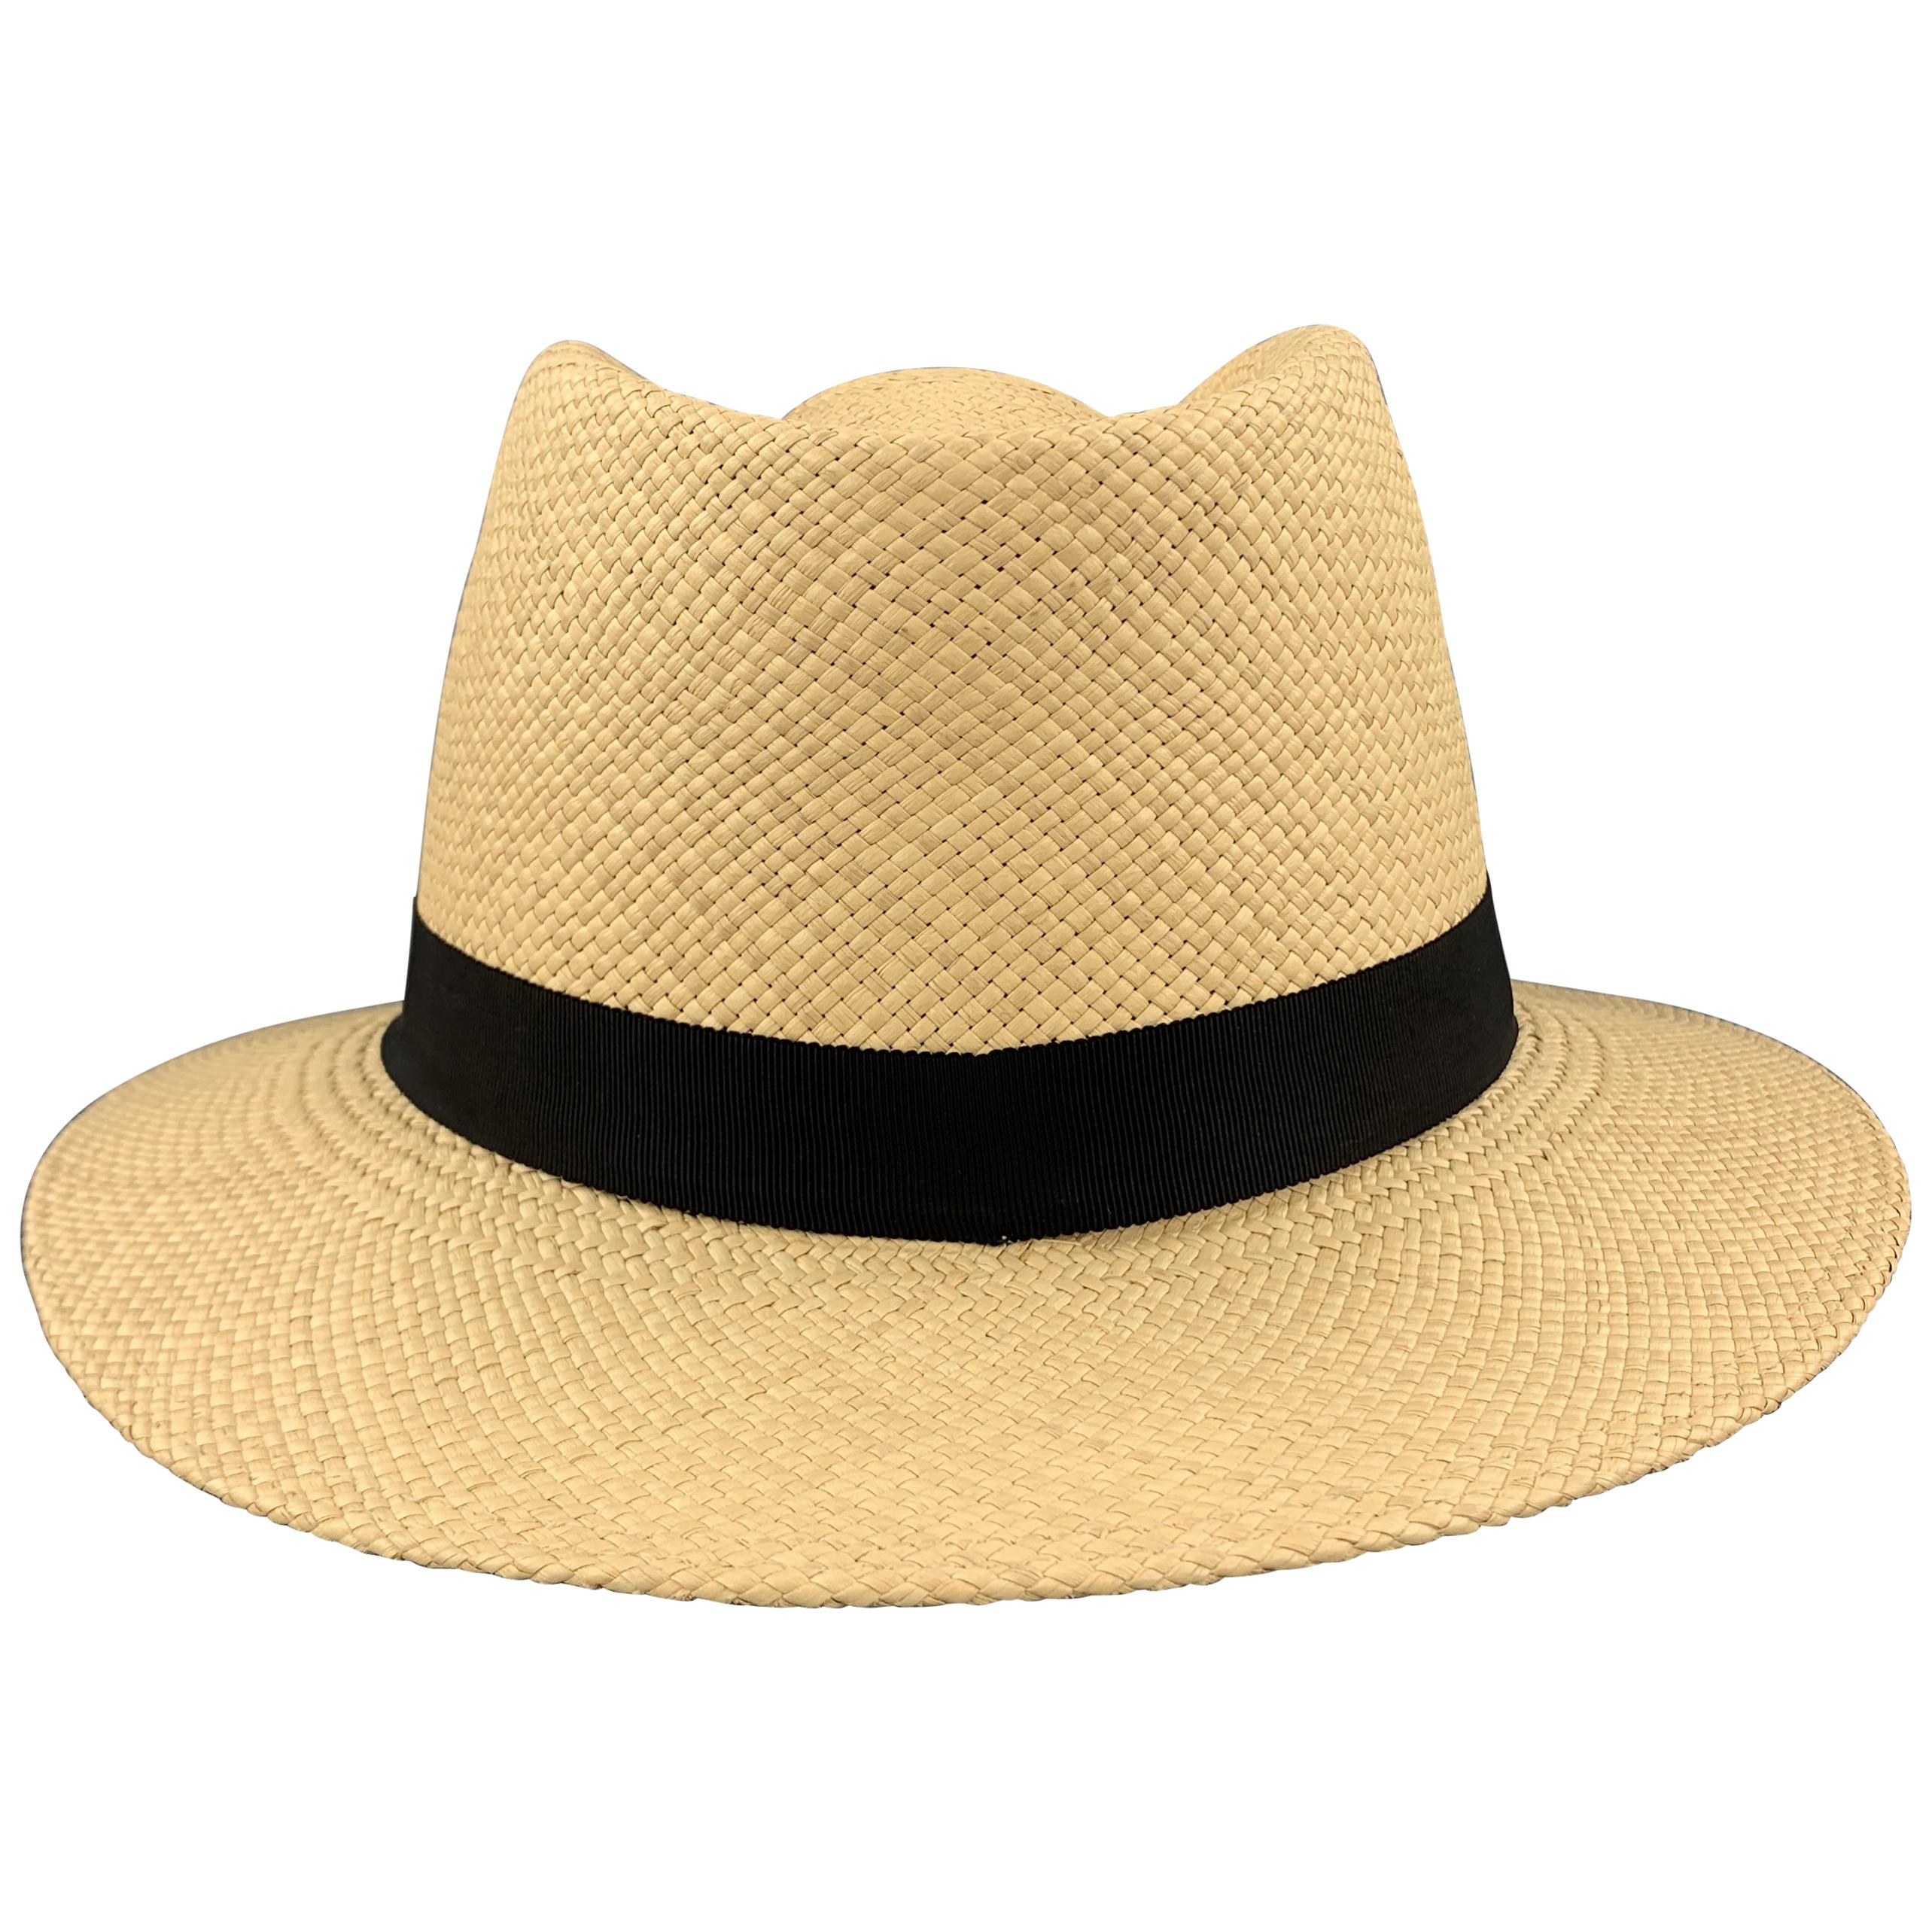 PAUL STUART Woven Natural Straw Panama Hat